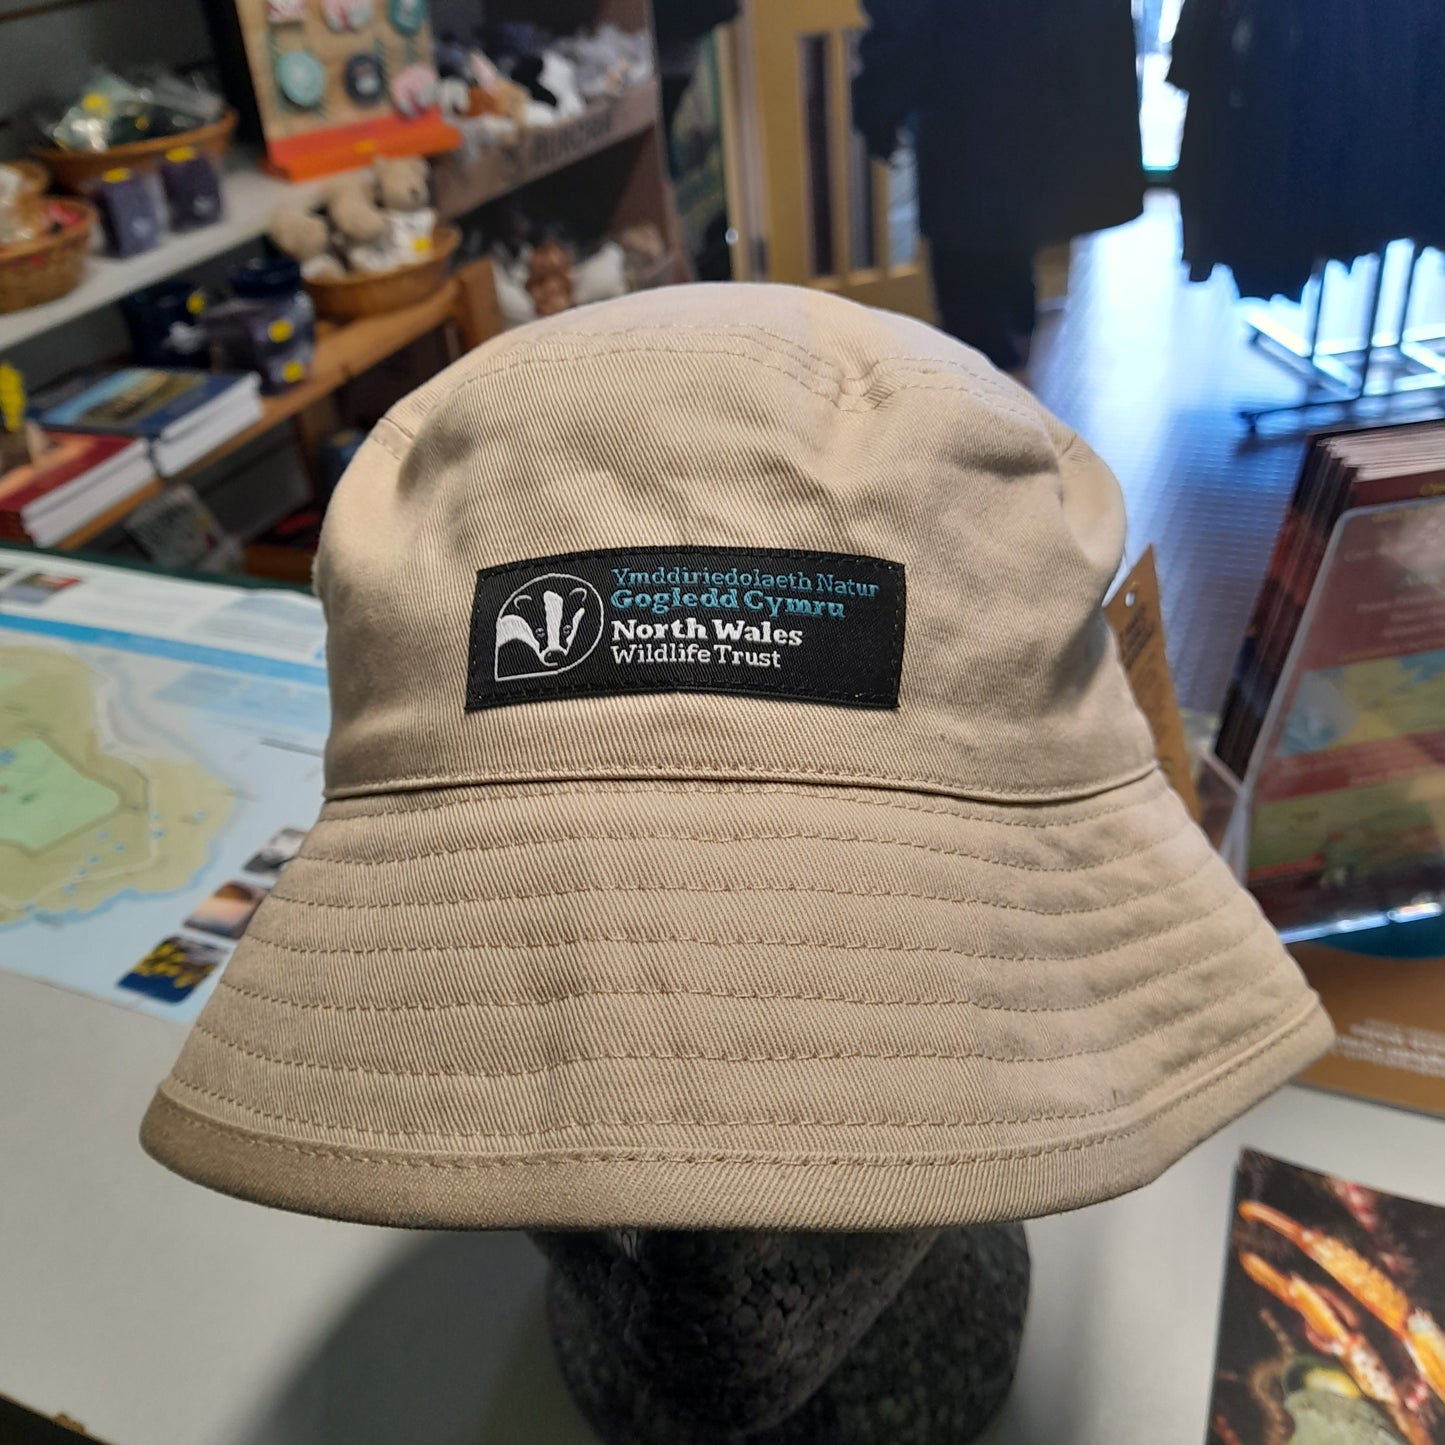 Organic cotton sun hat with NWWT badge logo